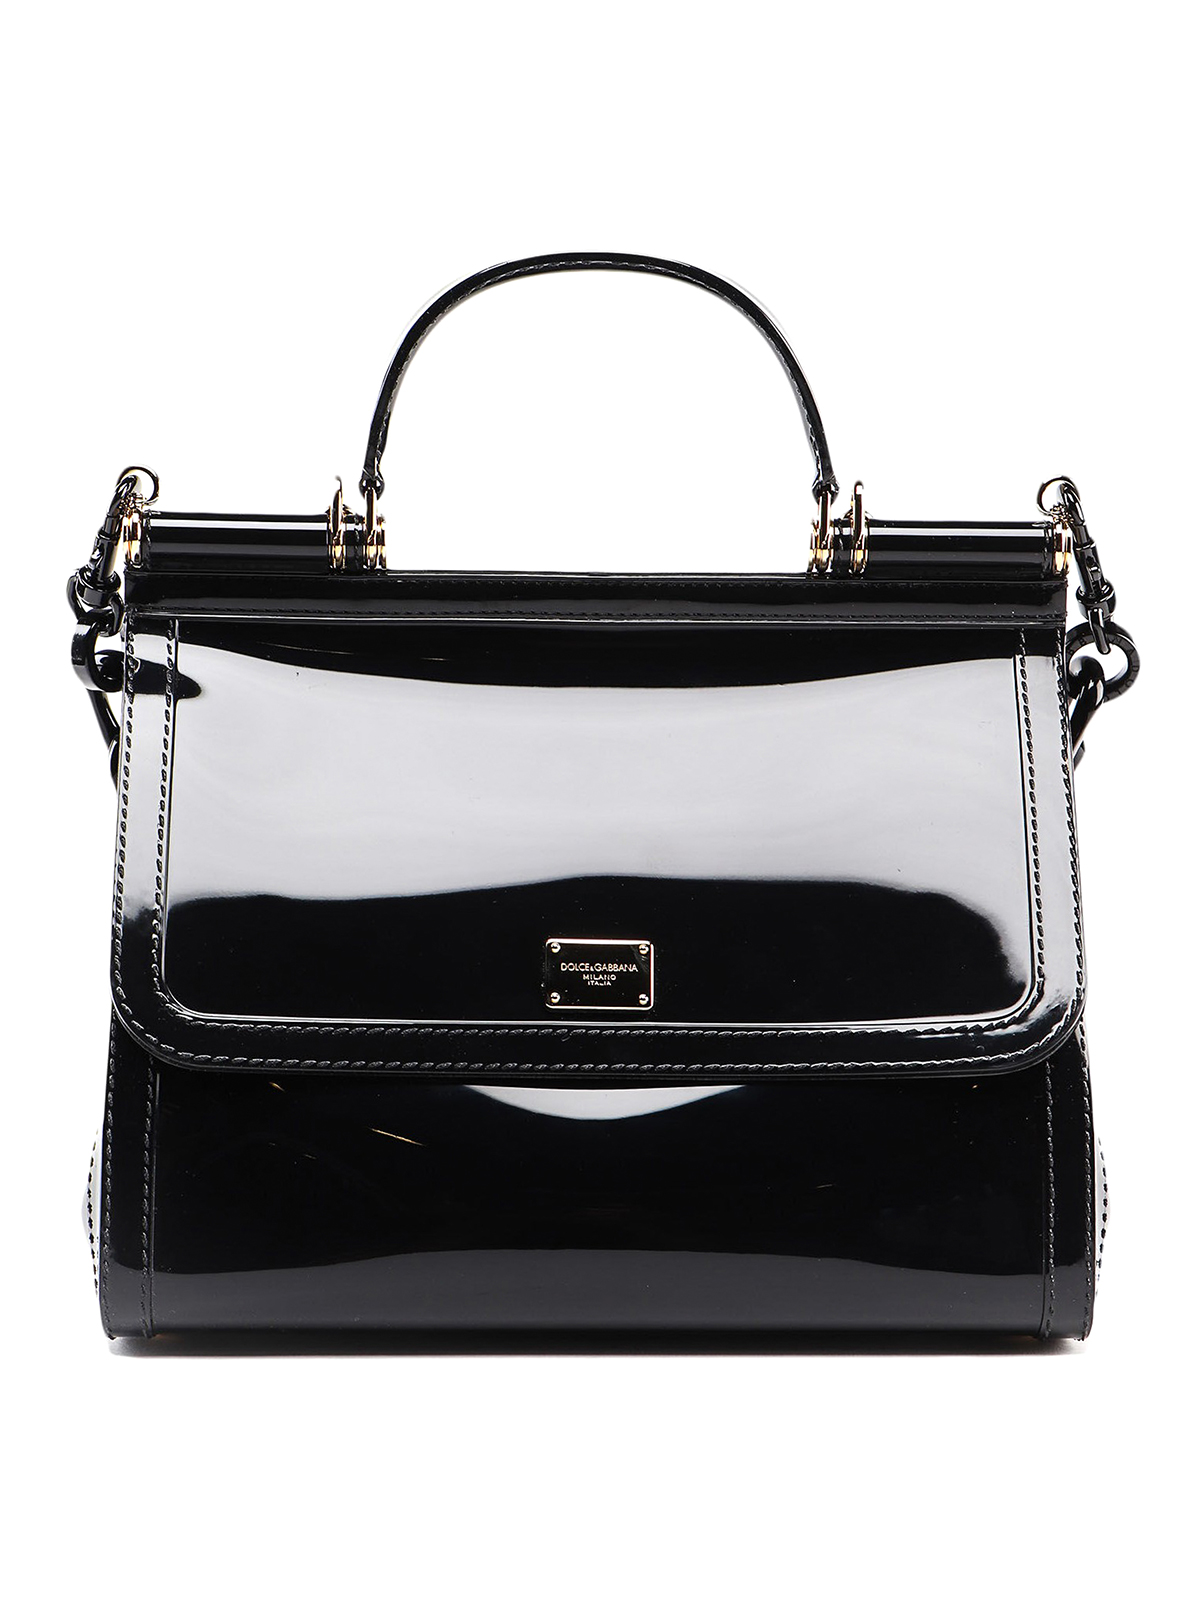 Opinions on Dolce & Gabbana Sicily Bag Large : r/handbags